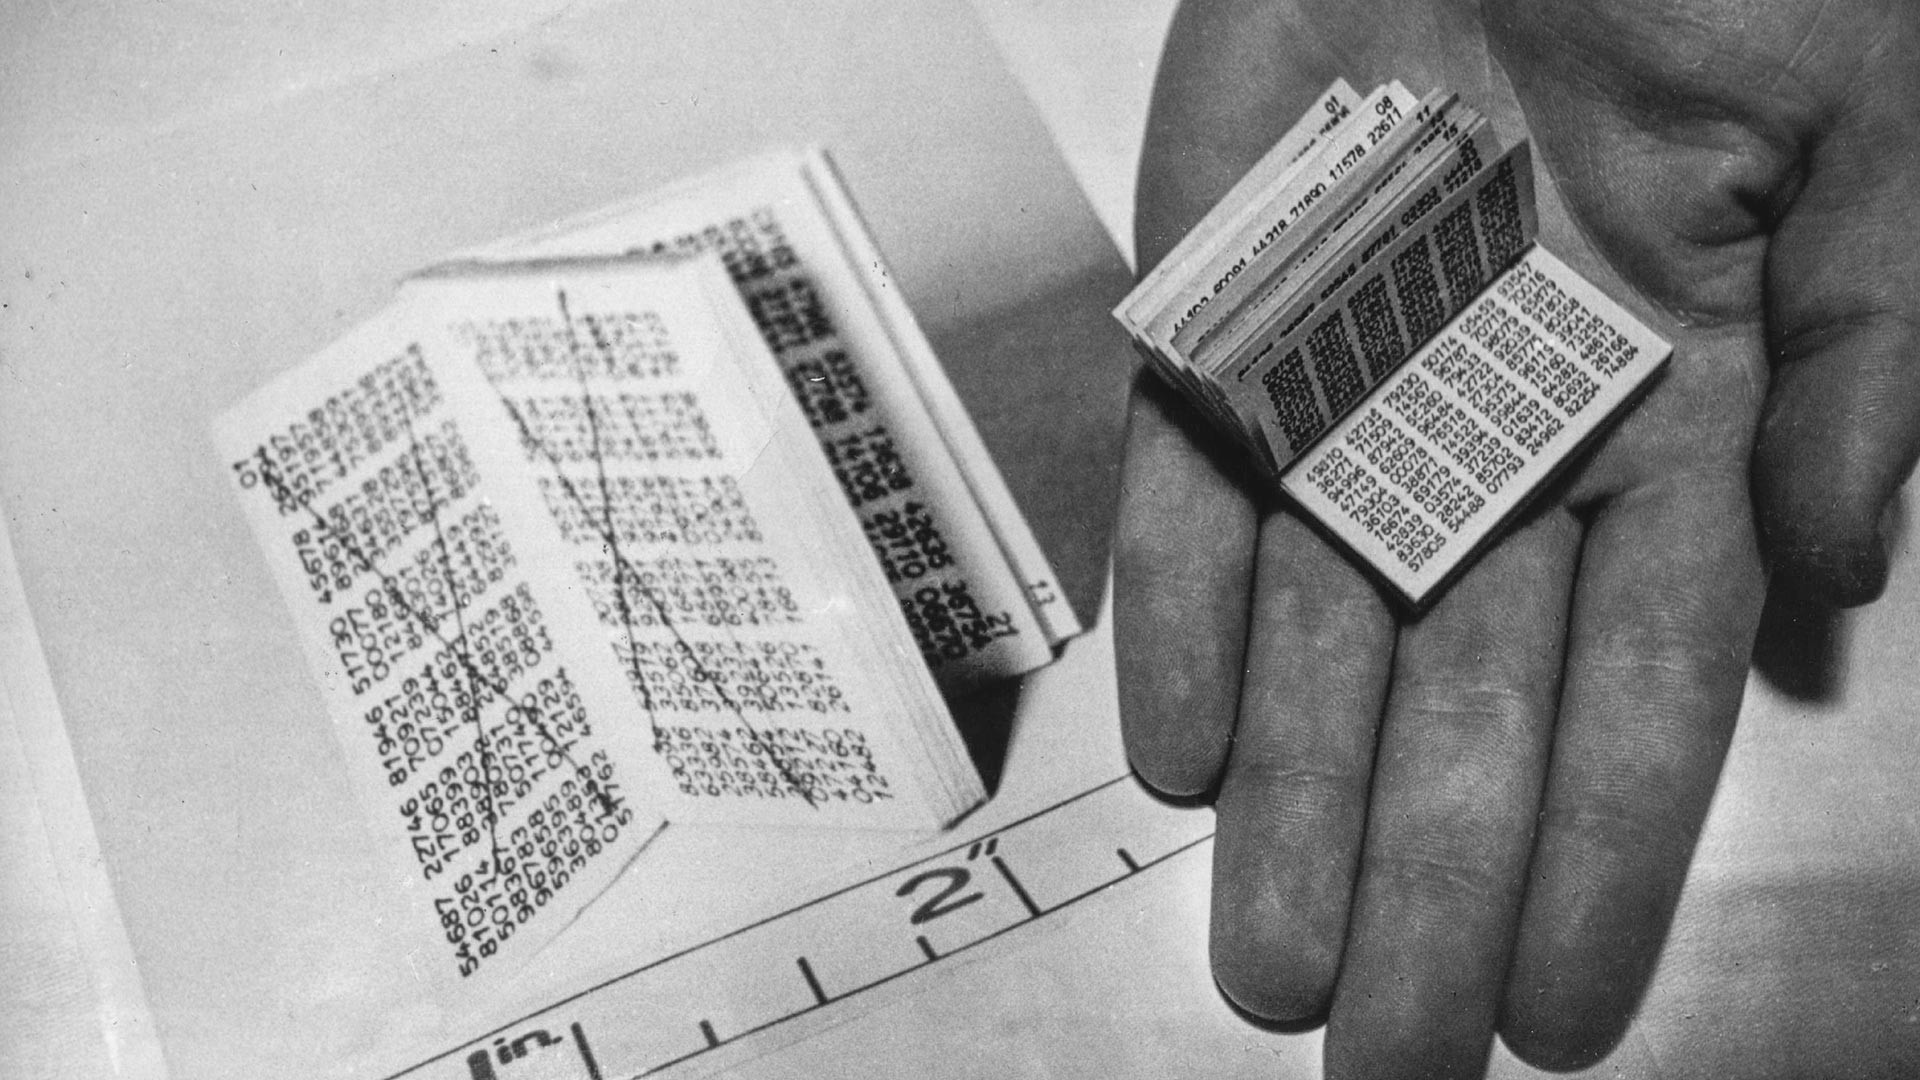 Buku kode mungil (diperbesar pada gambar sebelah kiri) berisi rangkaian angka, yang menurut Jaksa Agung Inggris Sir Elwyn Jones, digunakan mata-mata untuk memecahkan pesan rahasia dari Moskow. 